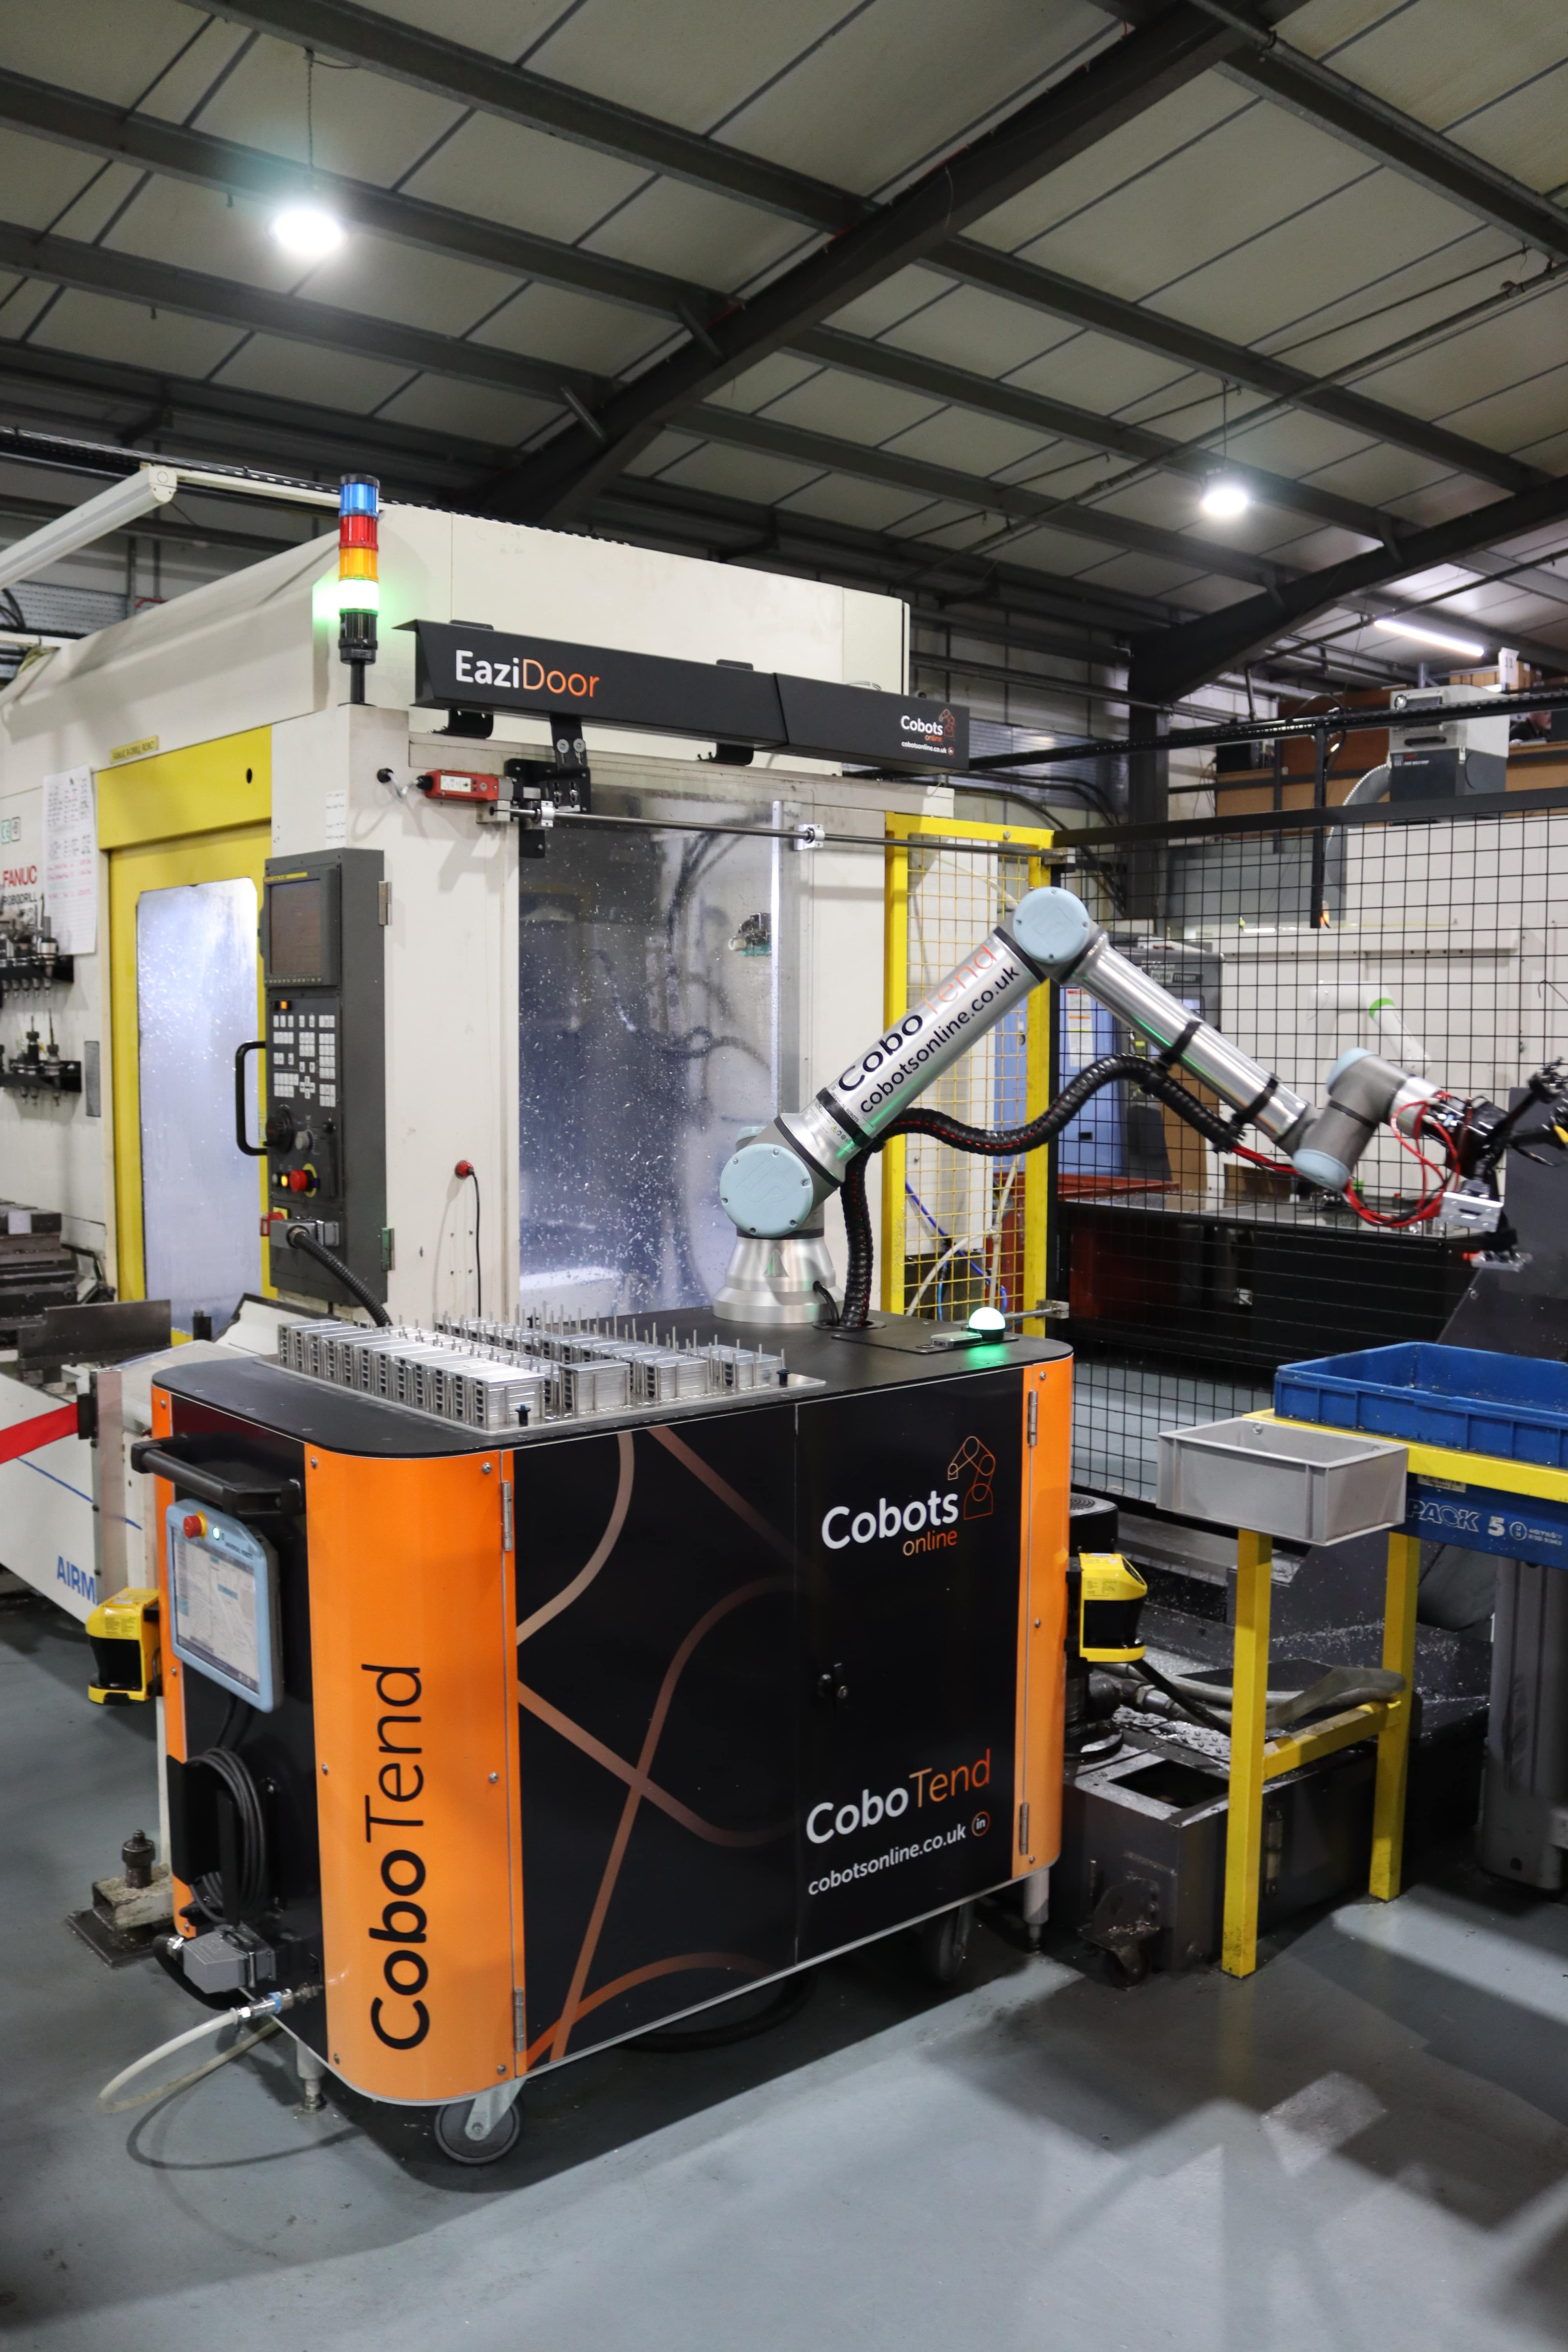 CoboTend mobile cobot unit in factory